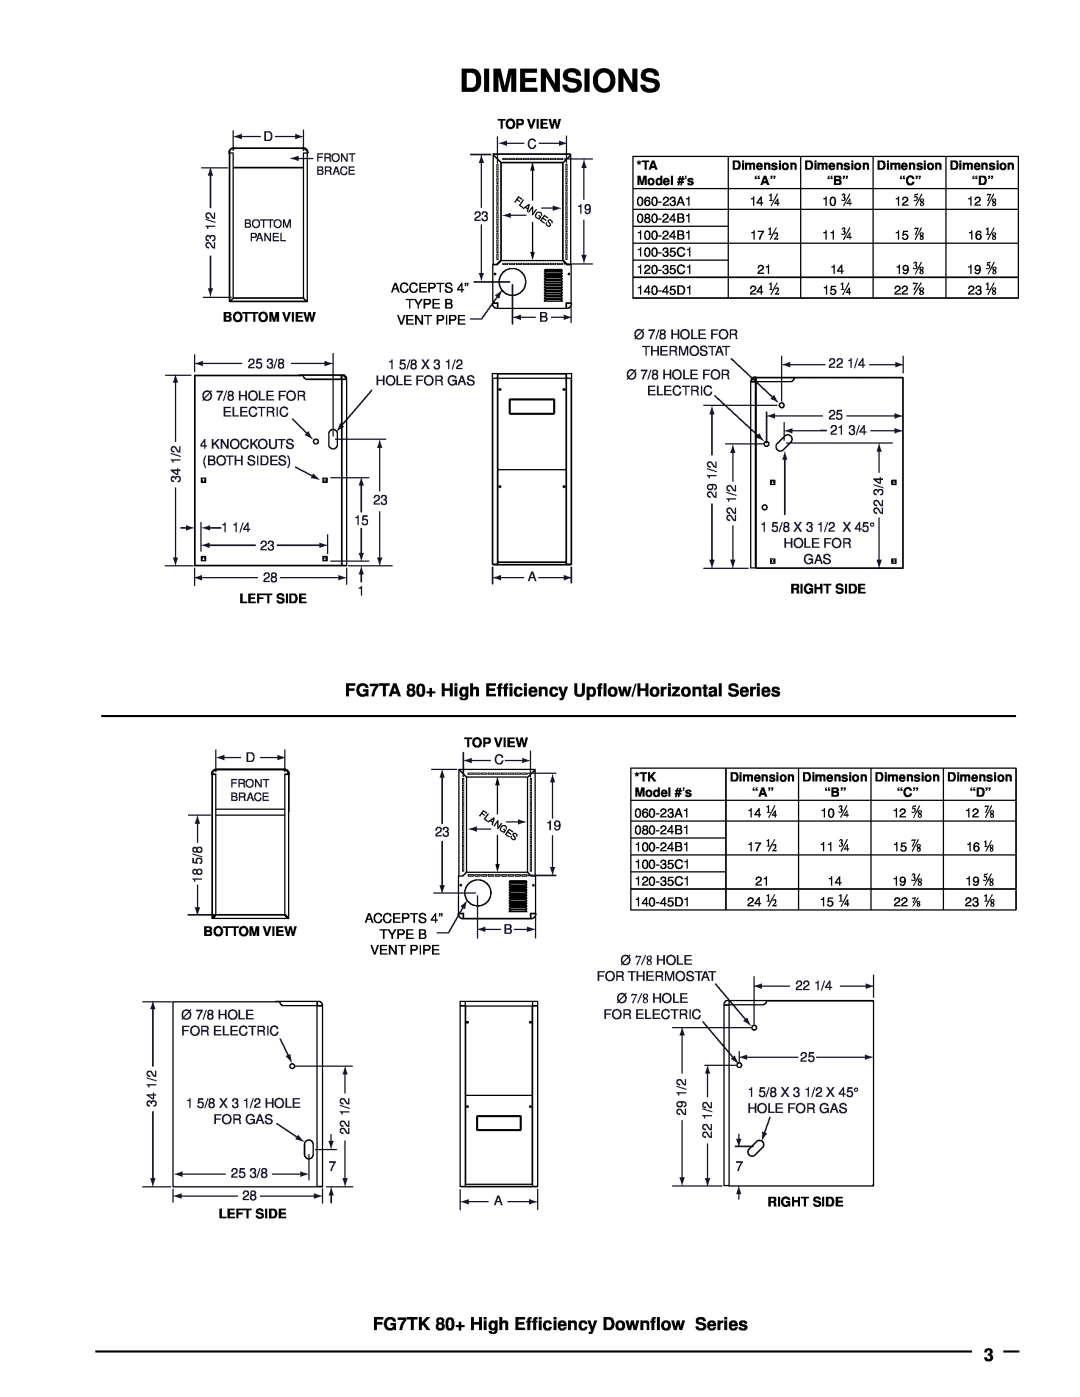 Nordyne warranty Dimensions, FG7TK 80+ High Efficiency Downflow Series, Left Side, Right Side 